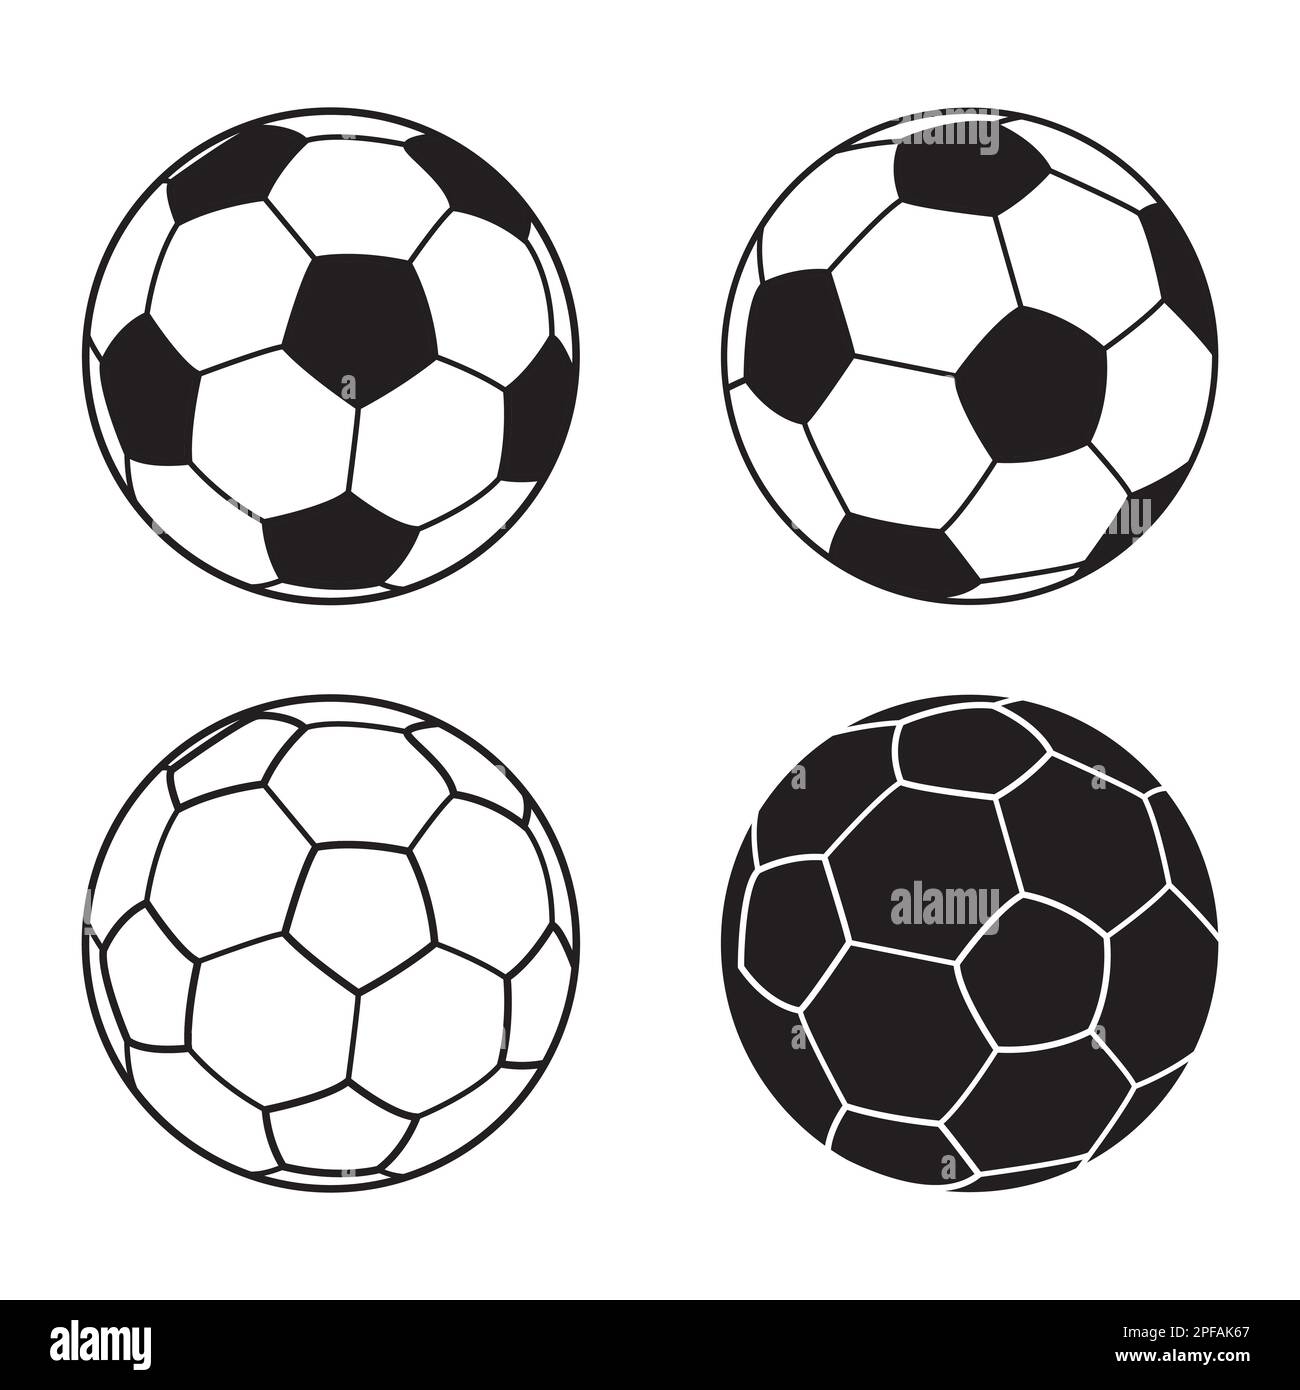 Soccer ball Vector illustration set, Soccer ball icon. Football simple black style, Vector illustration. Football silhouettes, Football vector Stock Vector